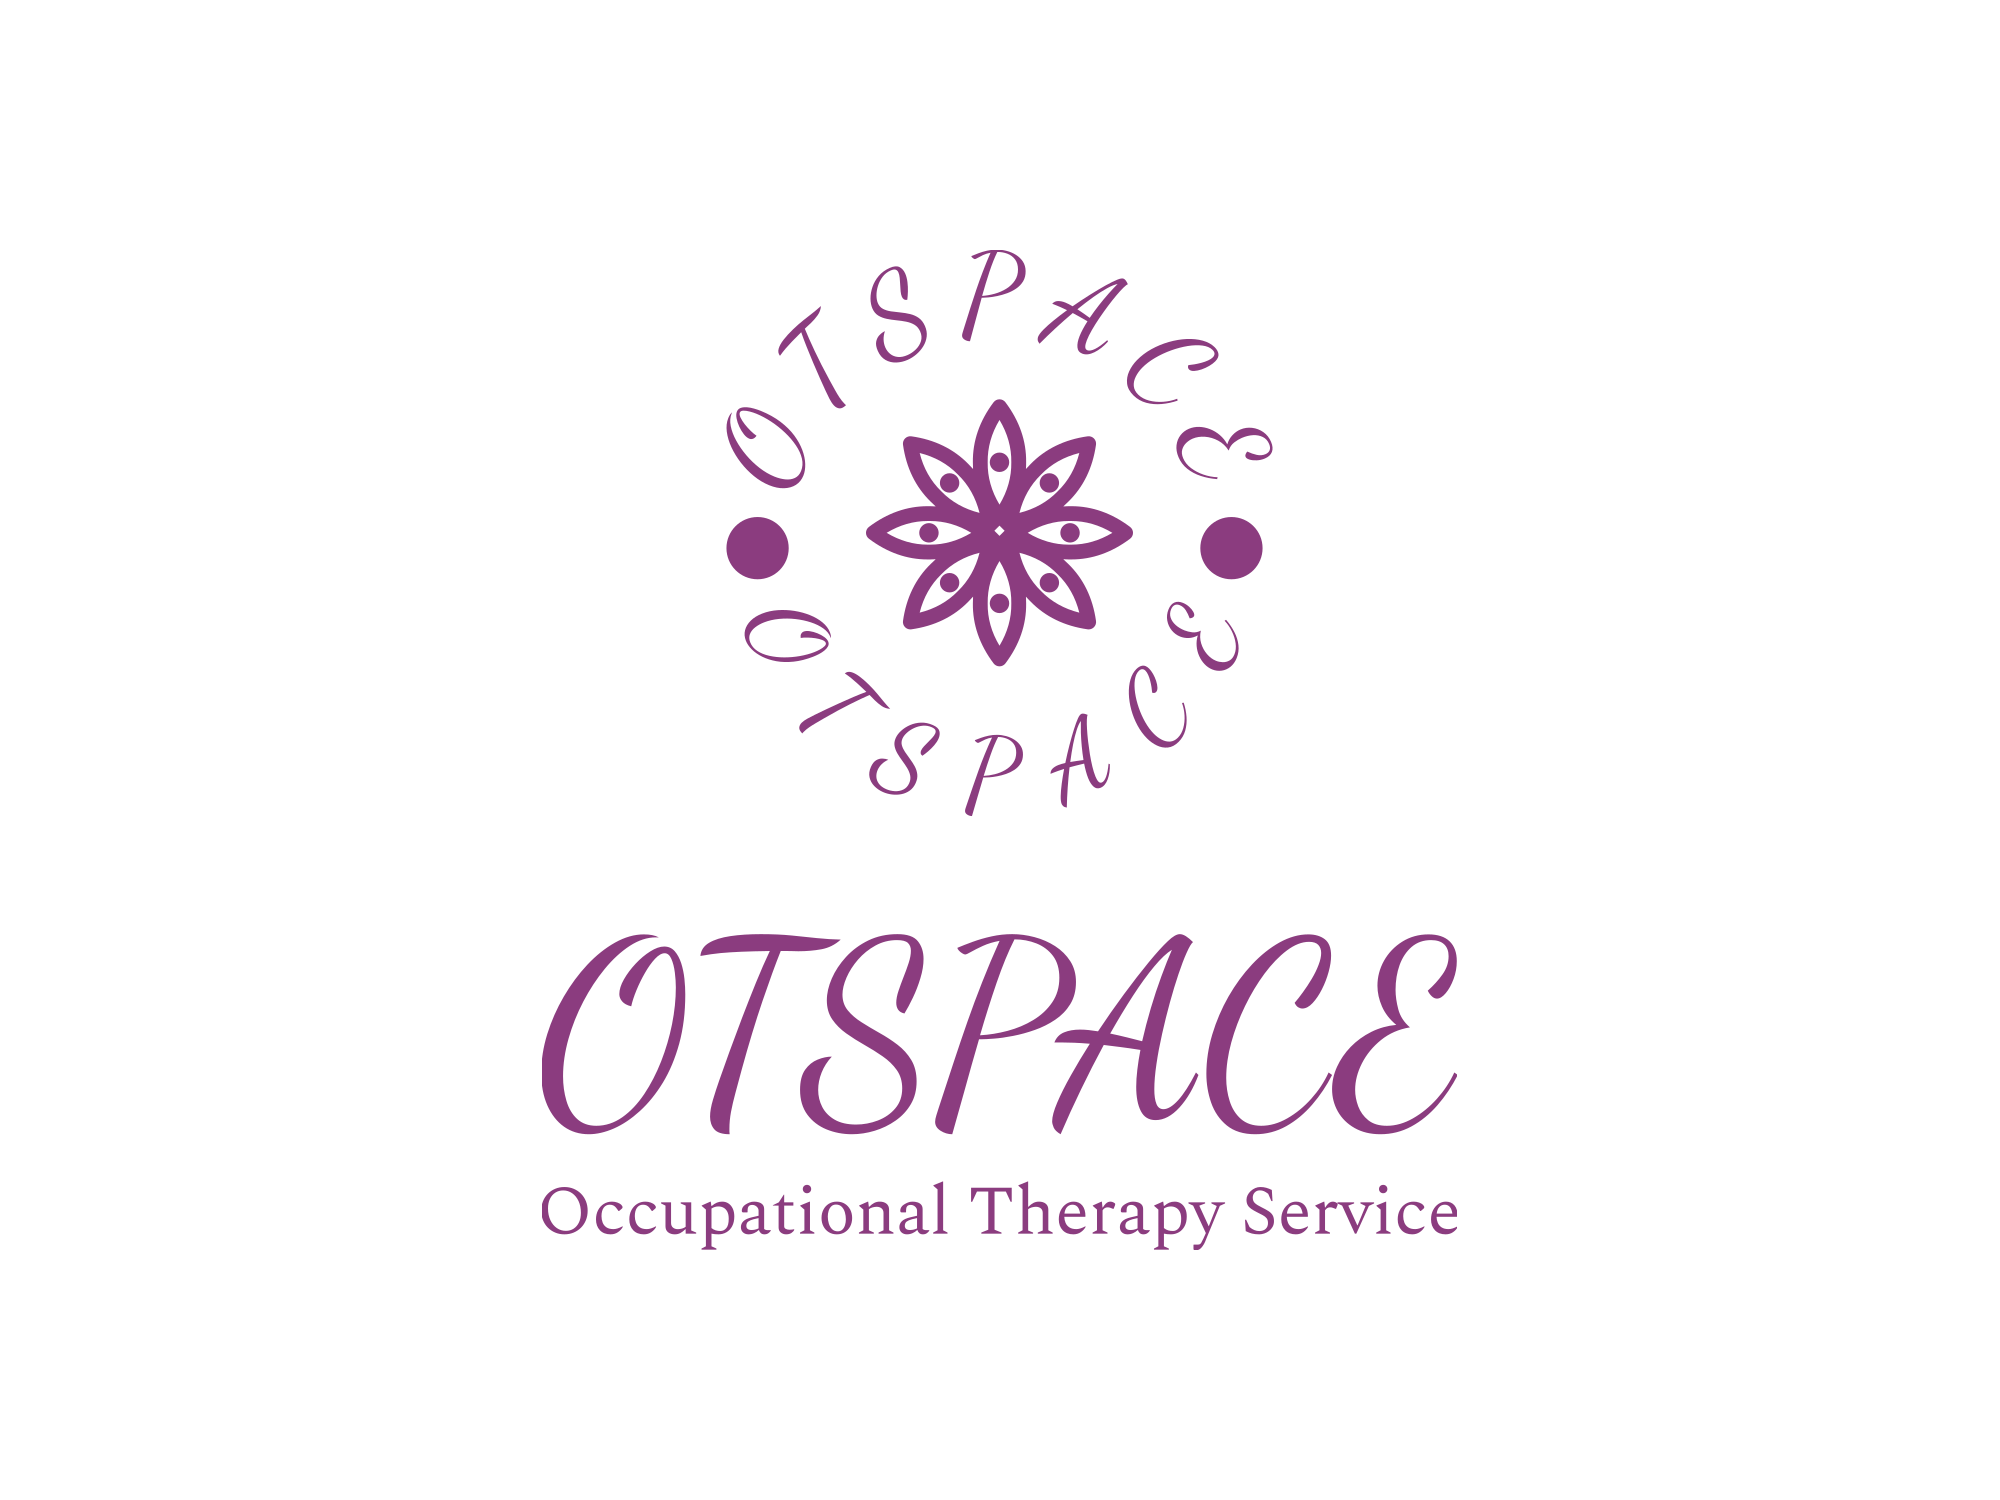 OTSpace